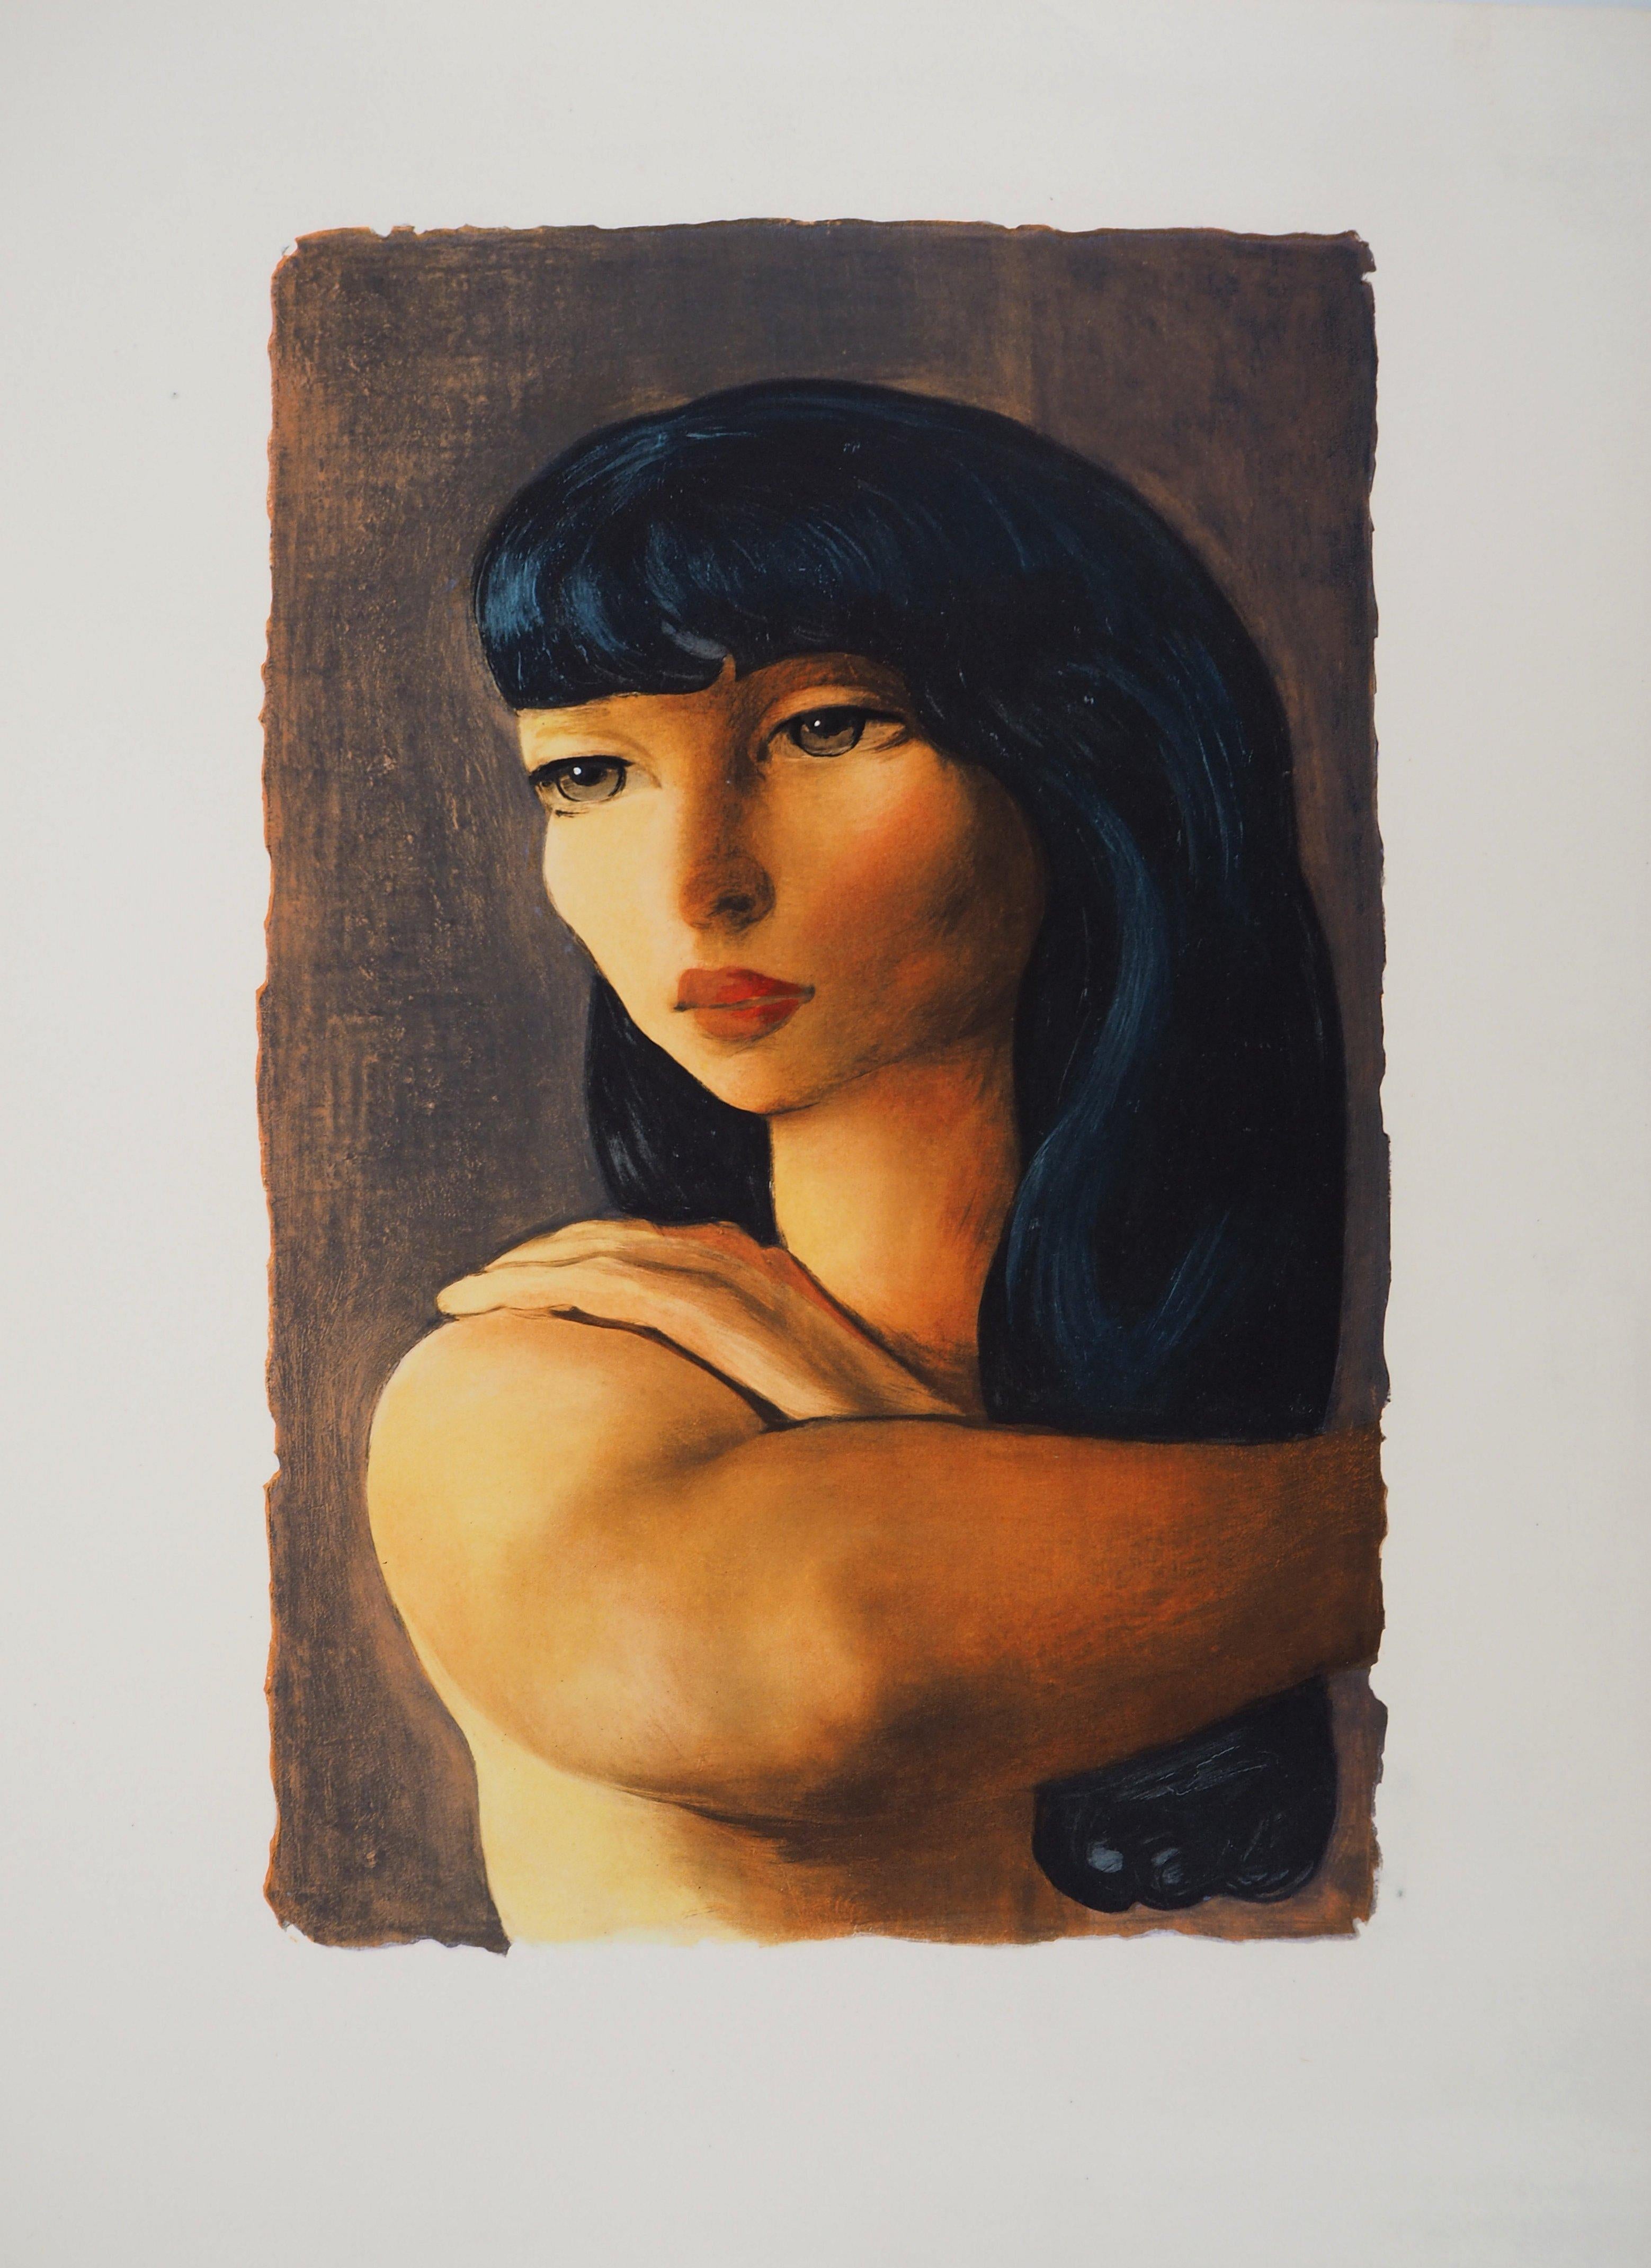 Moise Kisling Portrait Print - Dark Hair Woman with Tall Eyes - Lithograph